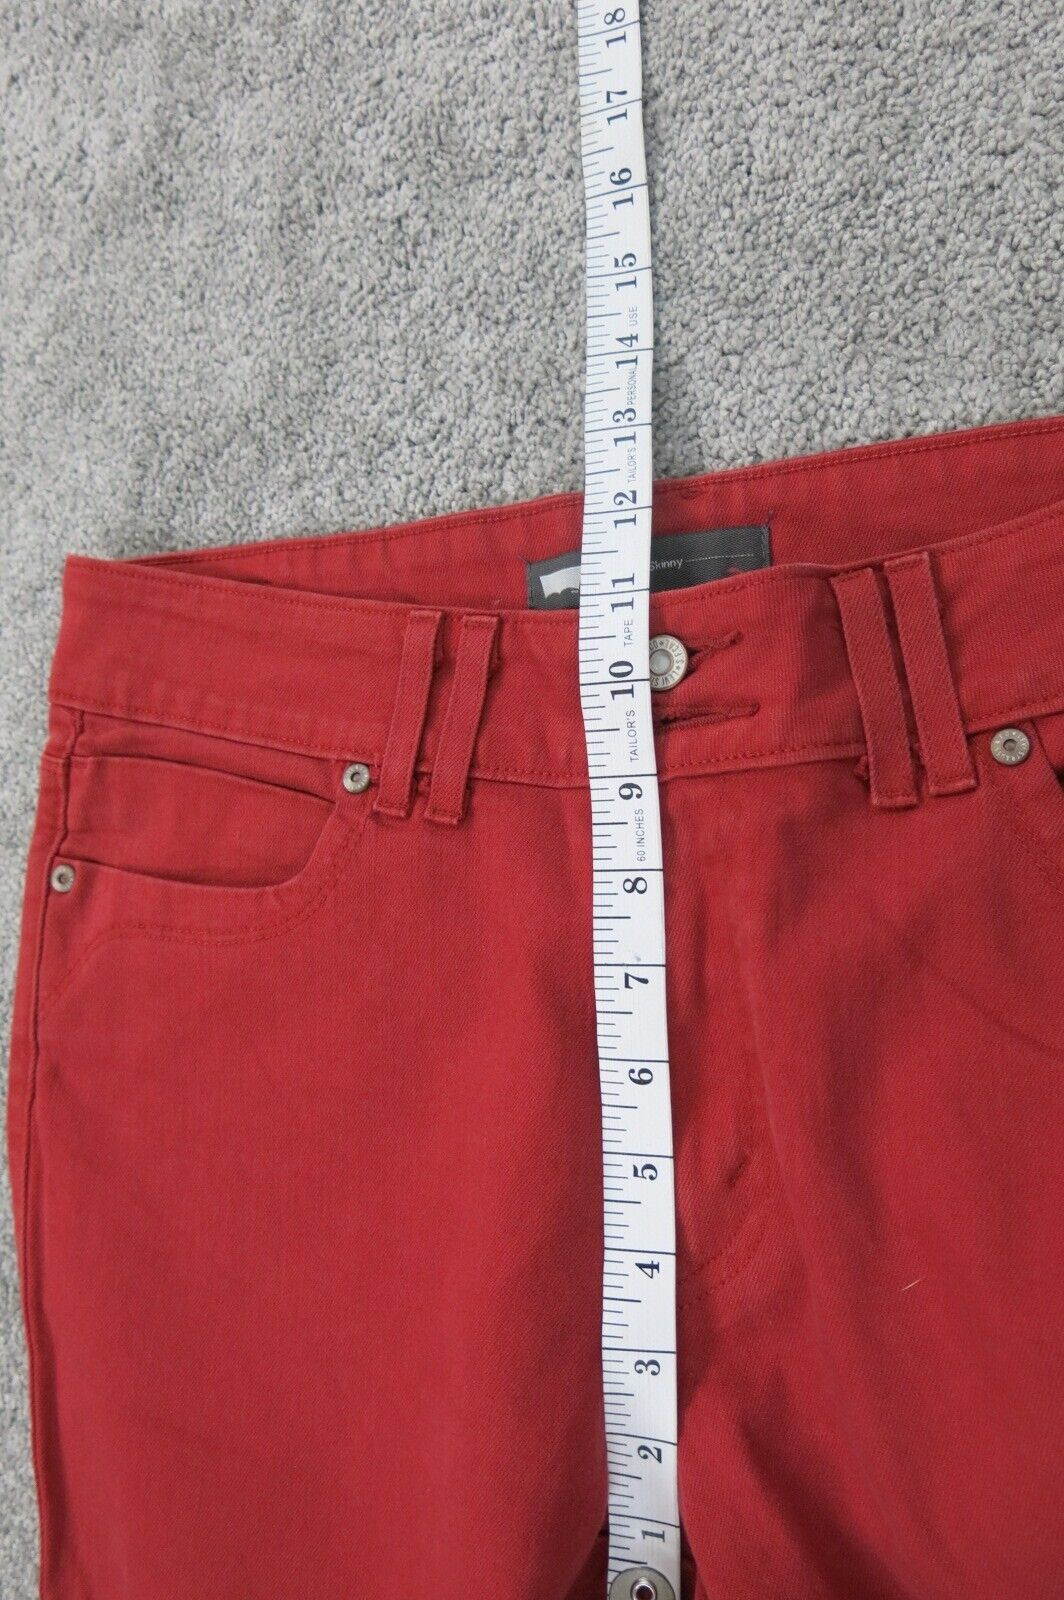 Levis Womens Slim Straight Leg Jeans Pant Stretch Denim Cotton Mid Rise Red 14 M